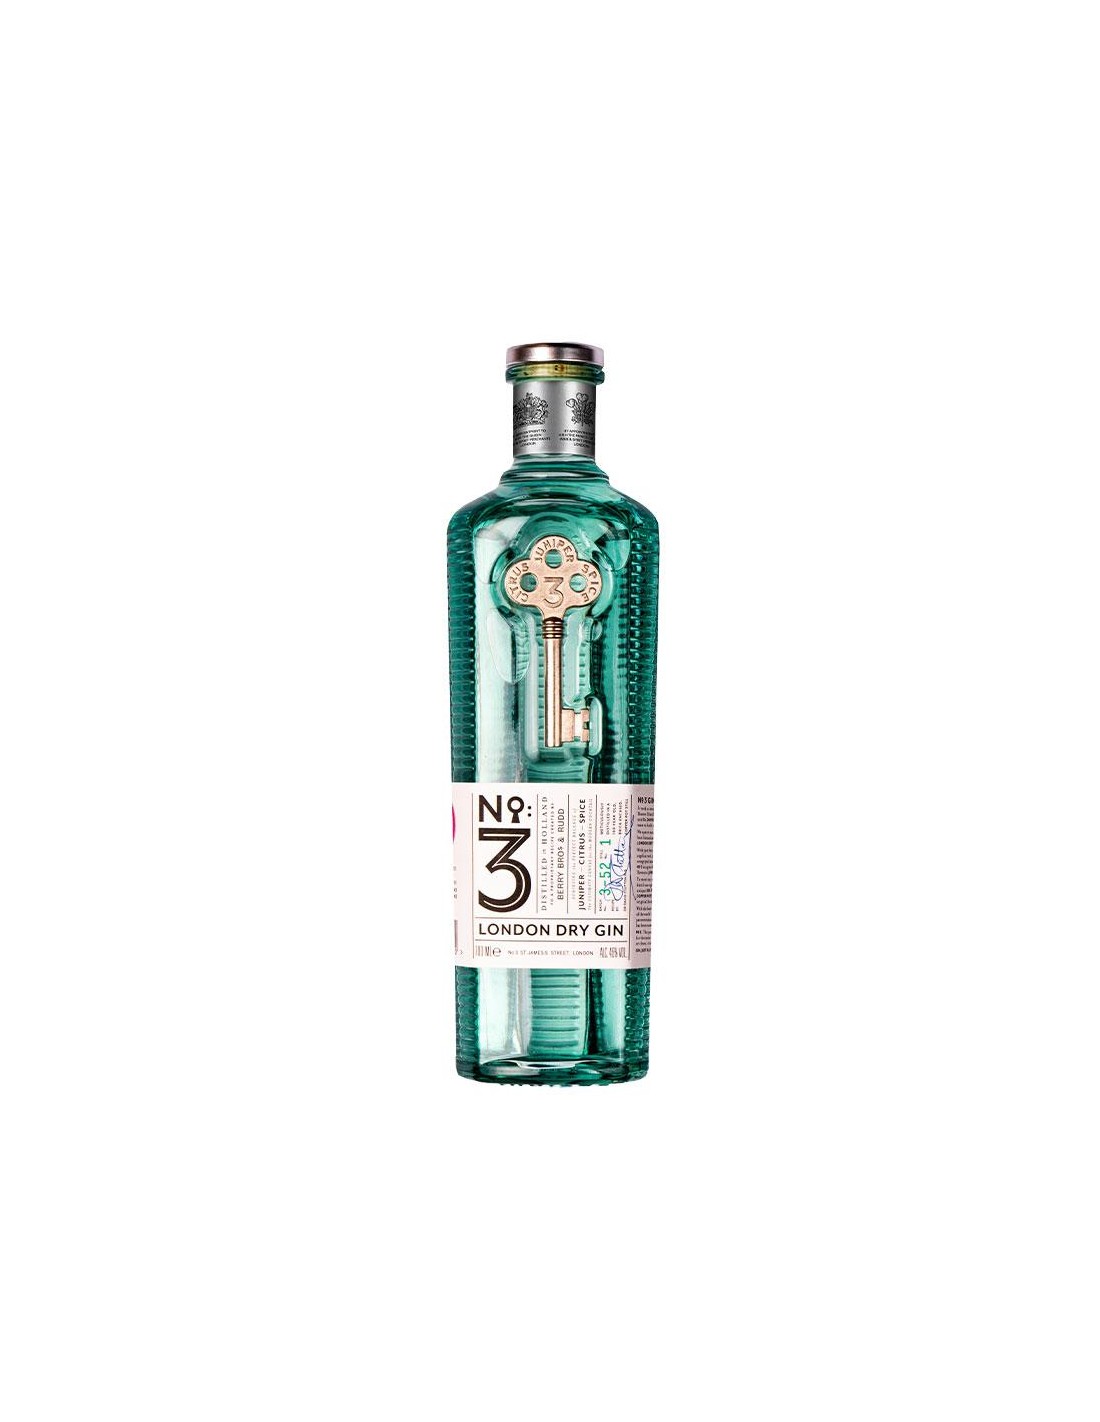 Gin London Dry No. 3, 46% alc., 0.7L, Anglia alcooldiscount.ro